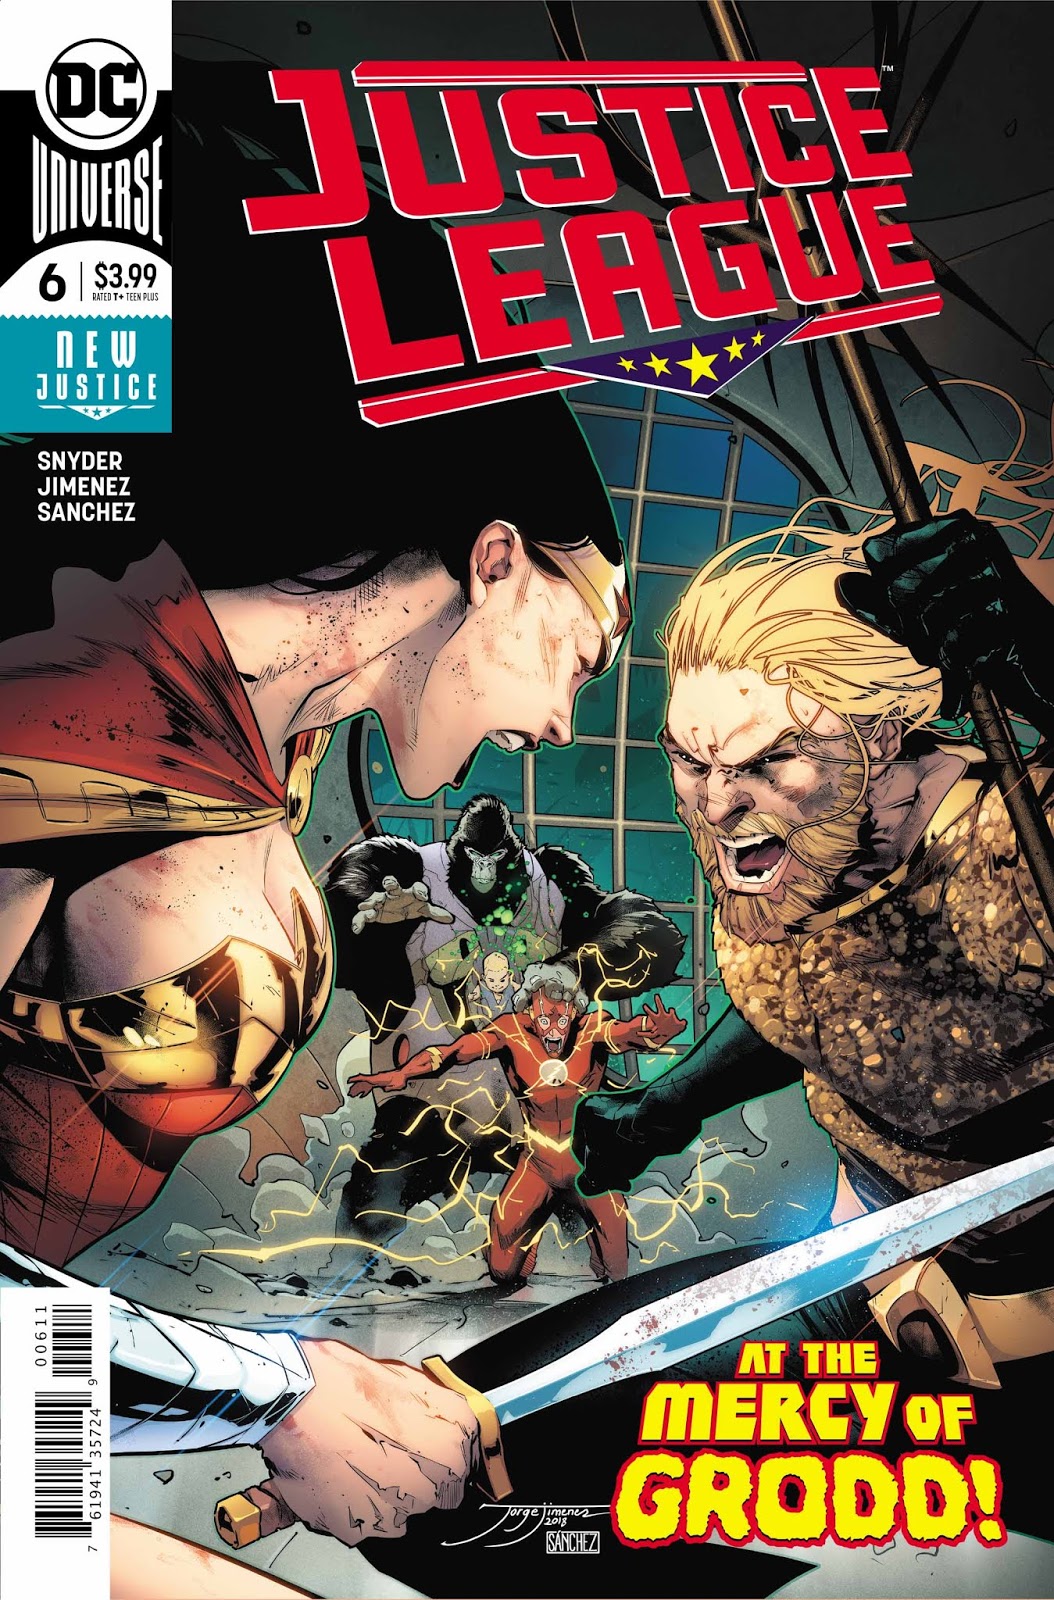 Weird Science DC Comics: RWBY/Justice League #6 Review